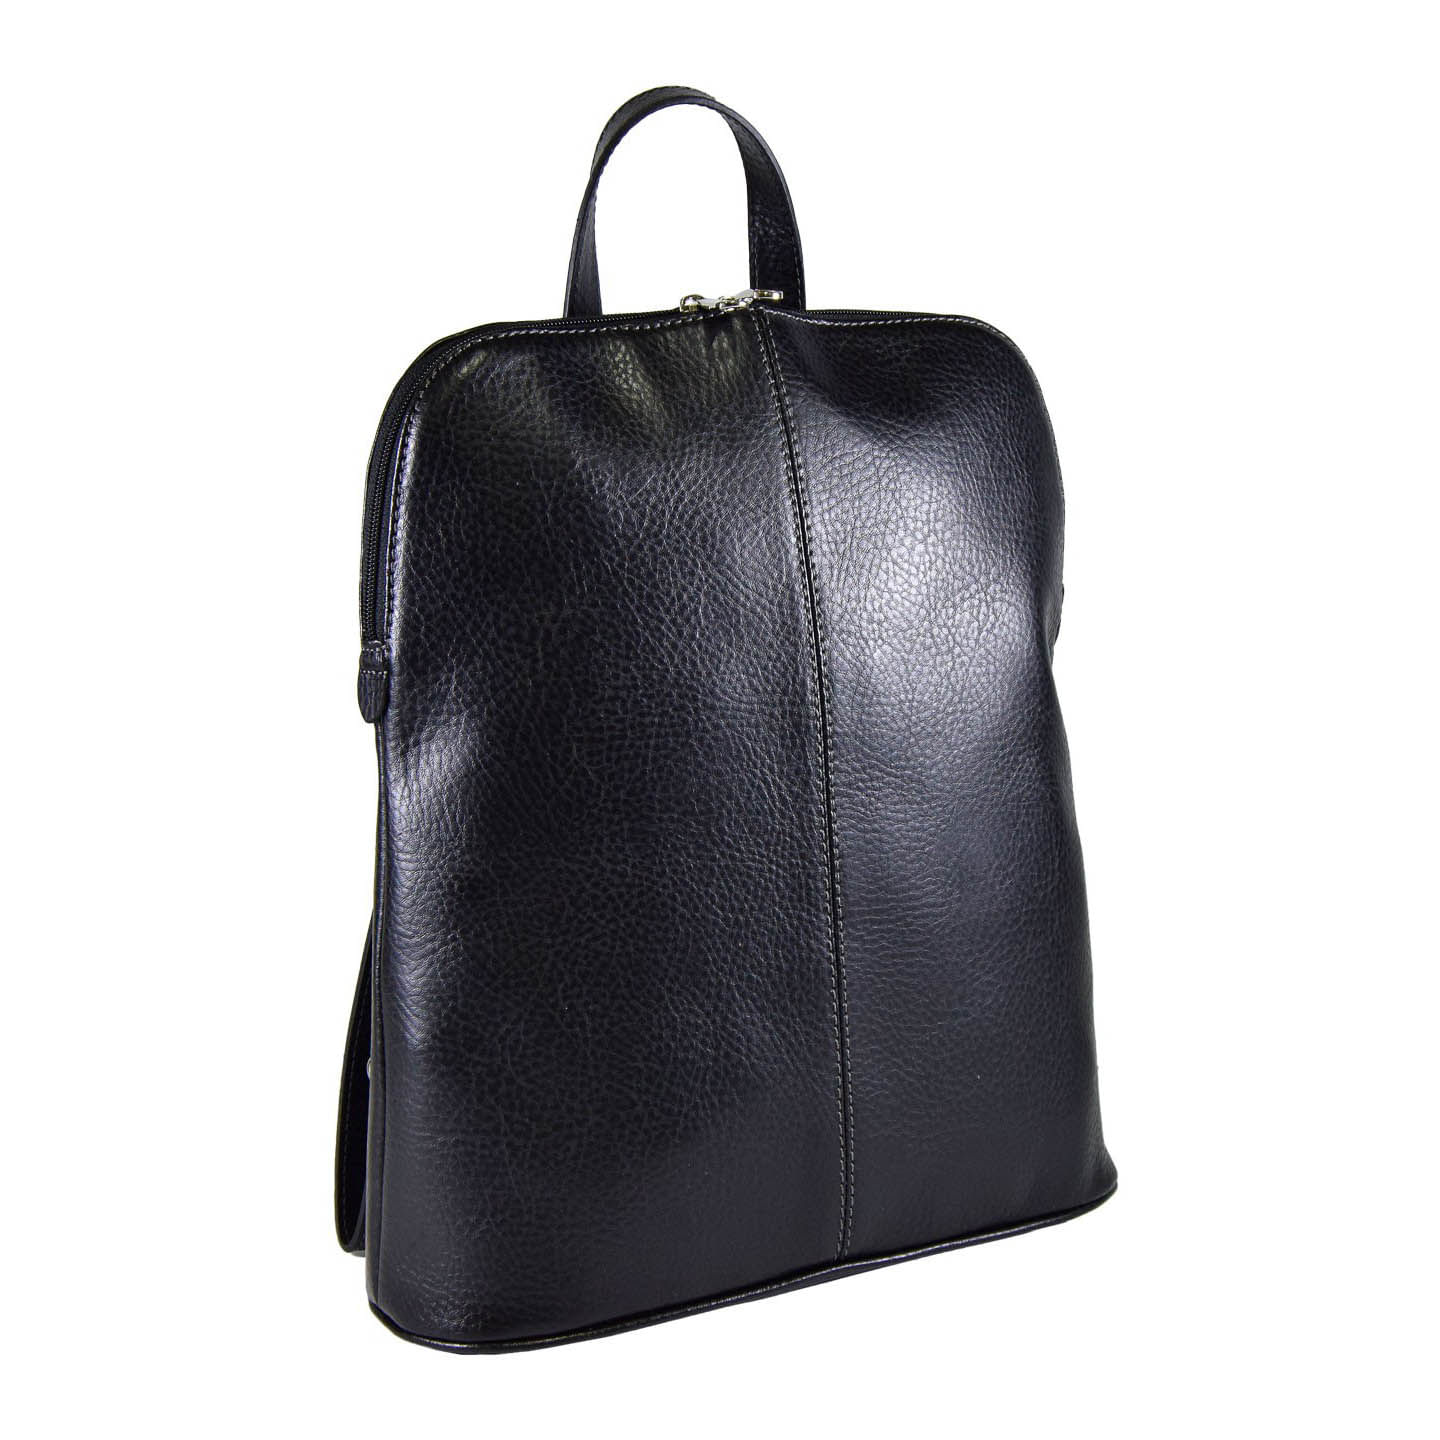 Rucsac/geanta dama din piele naturala moale, model 213, negru